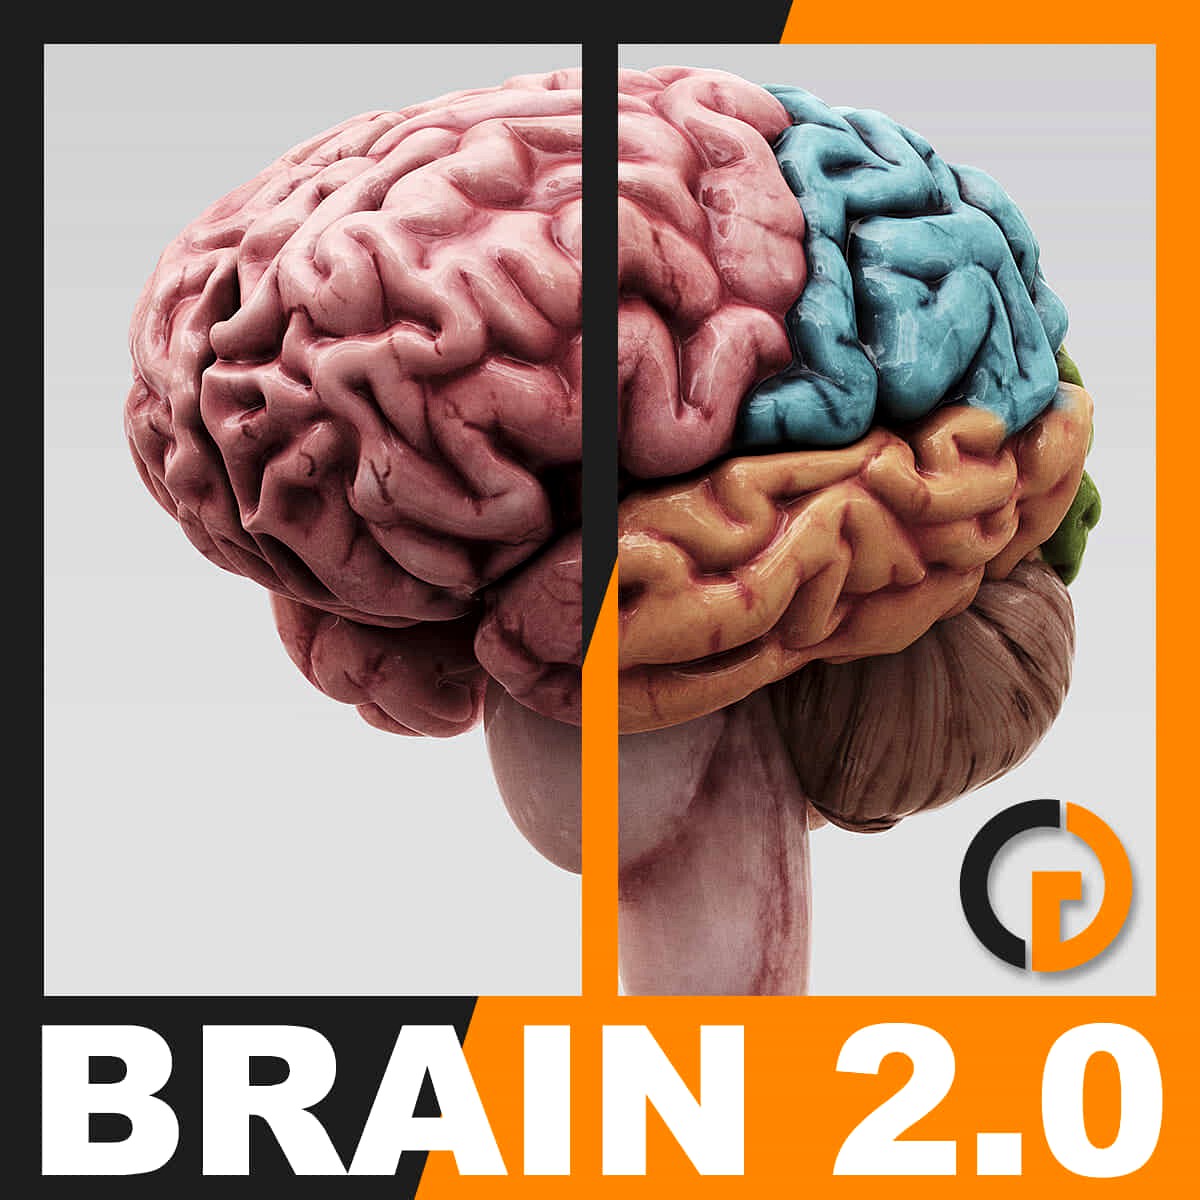 Human Brain 2.0 - Anatomy